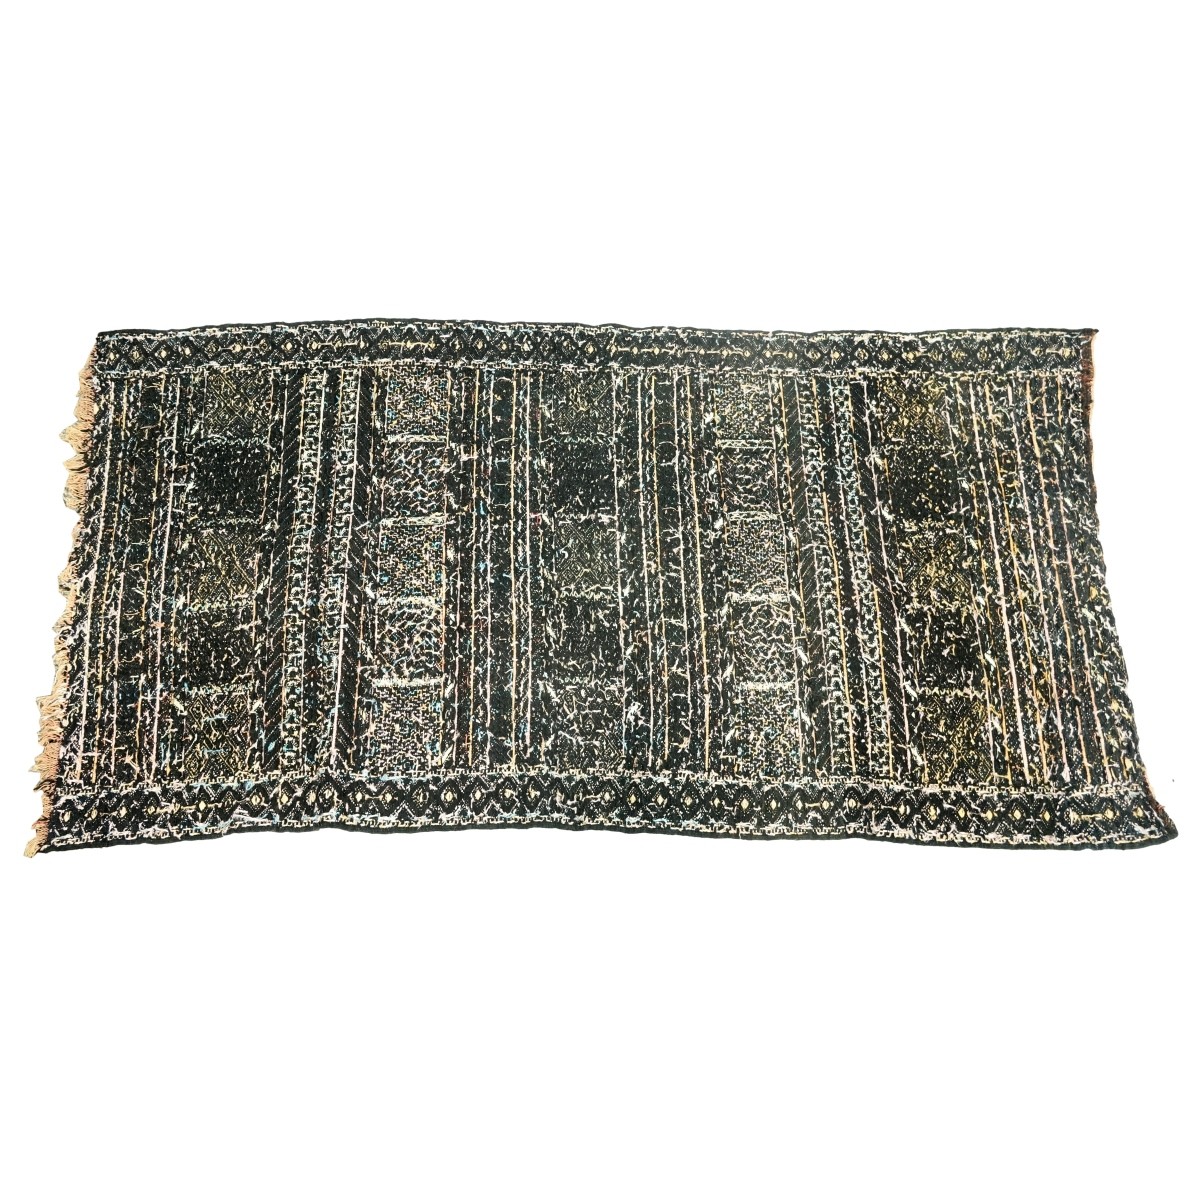 Antique Soumak Persian Tribal Style Wool Rug